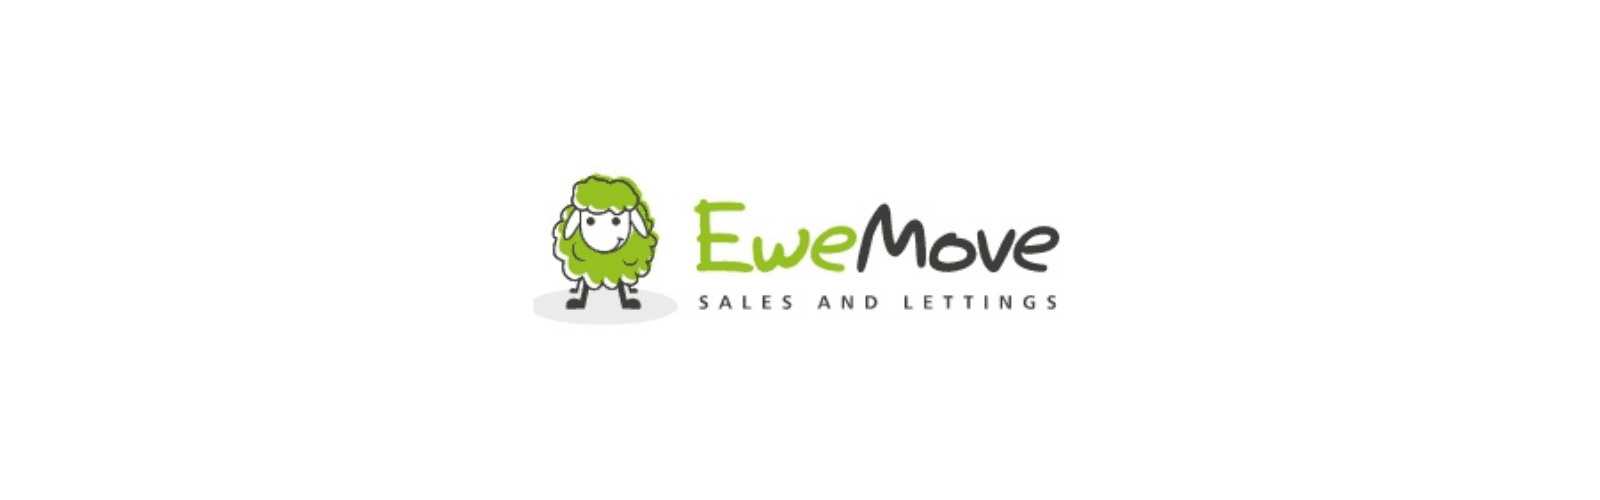 A logo for evermove